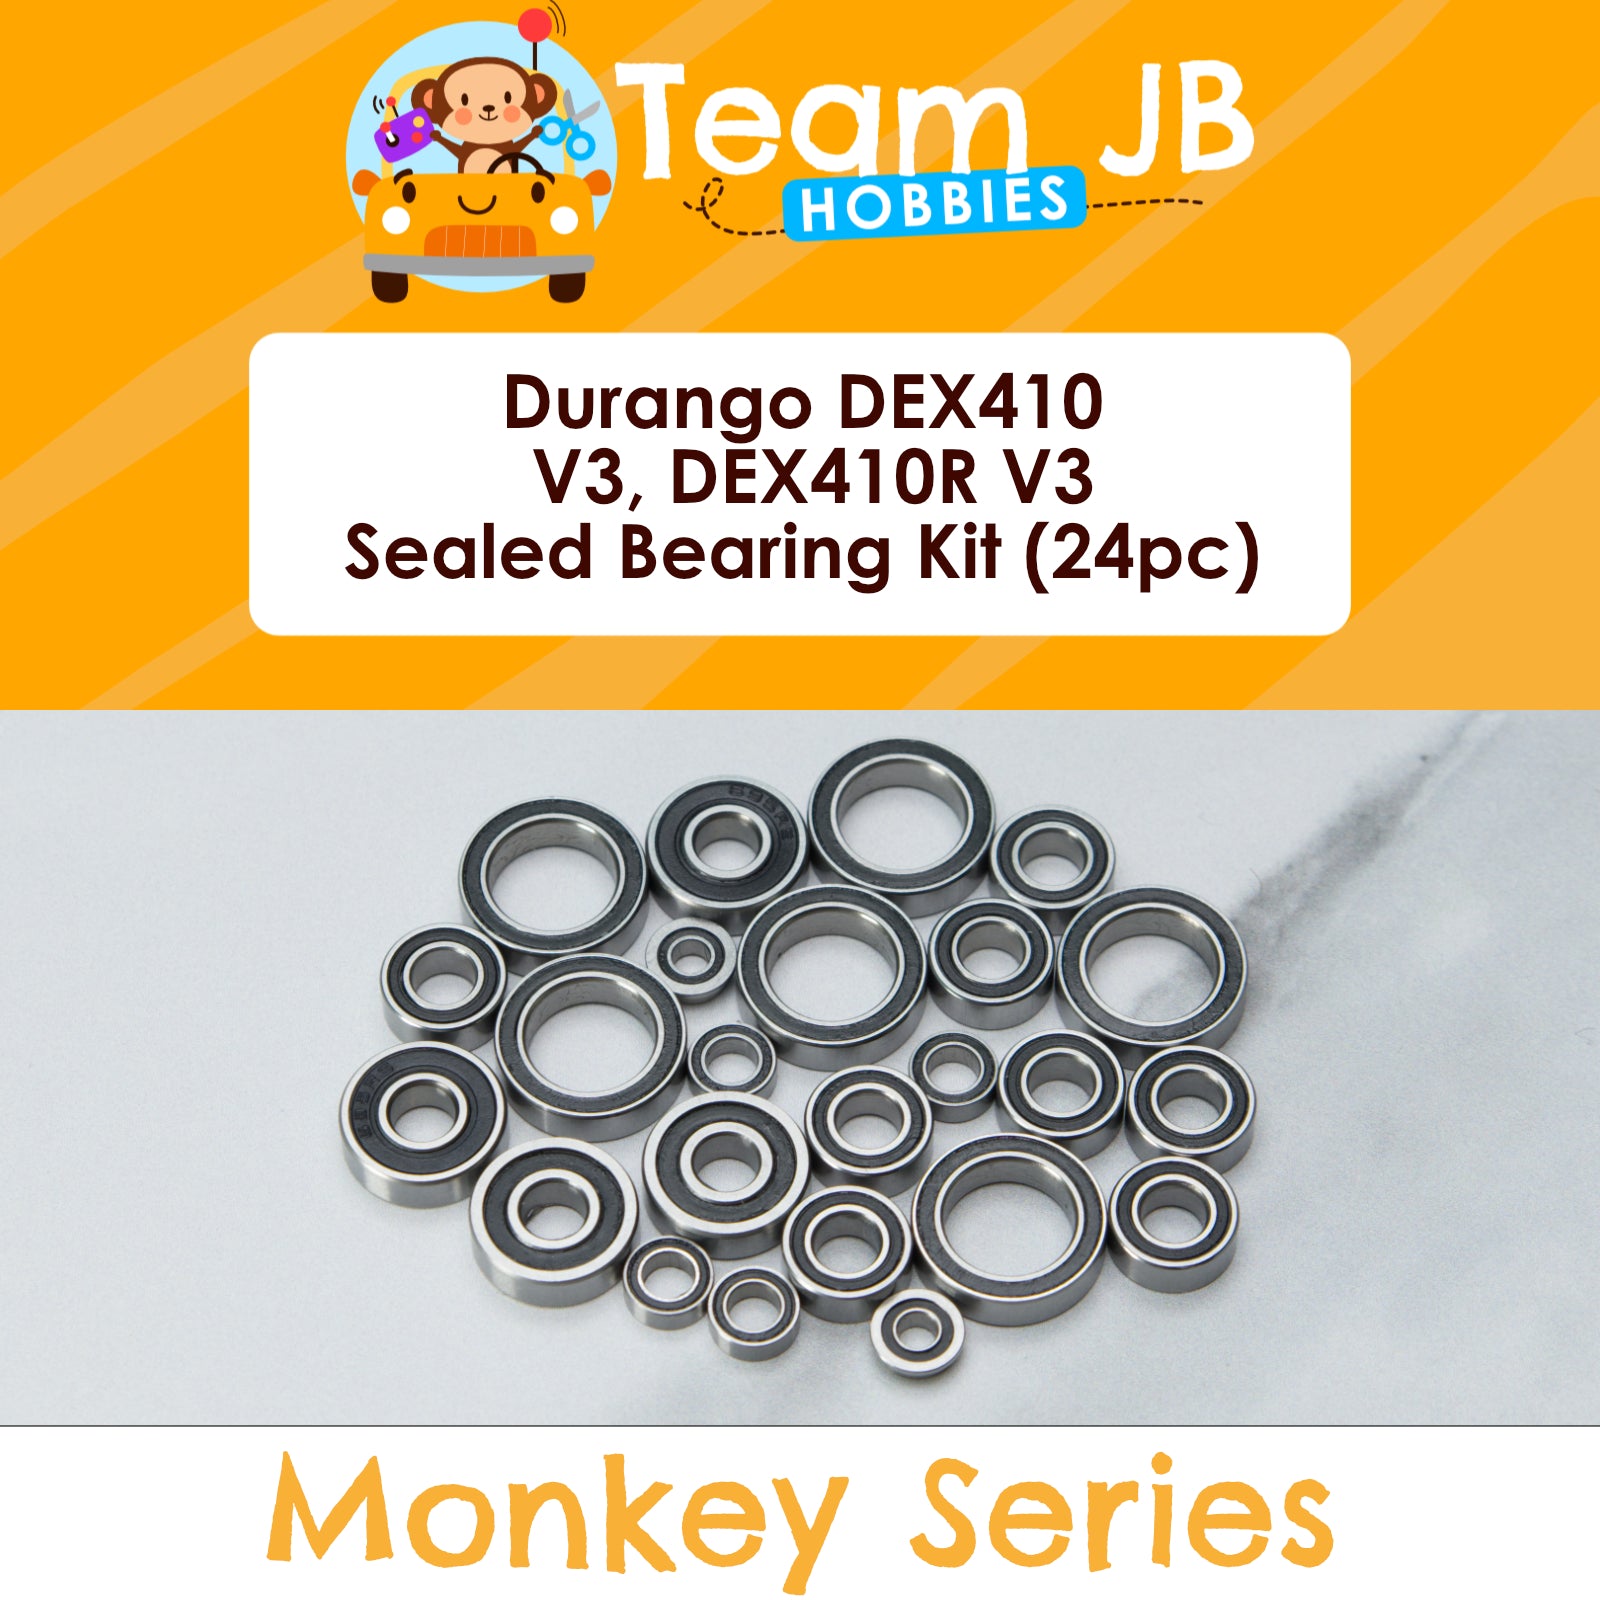 Durango DEX410 V3, DEX410R V3 - Sealed Bearing Kit